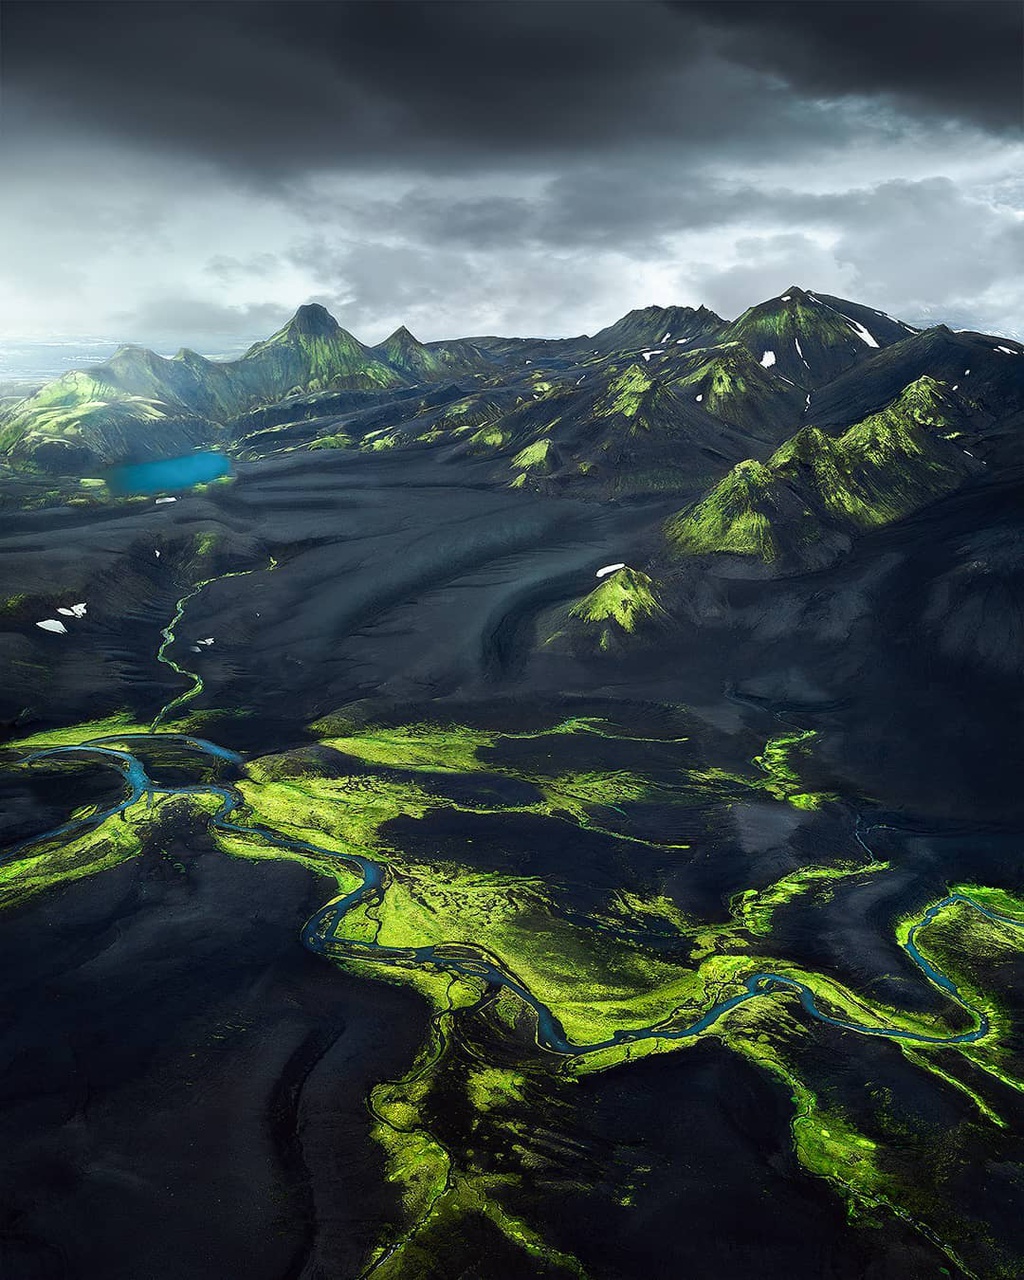 Iceland hoa thuoc phim vien tuong voi nhung mien dat mau xanh hinh anh 7 4.1.jpg